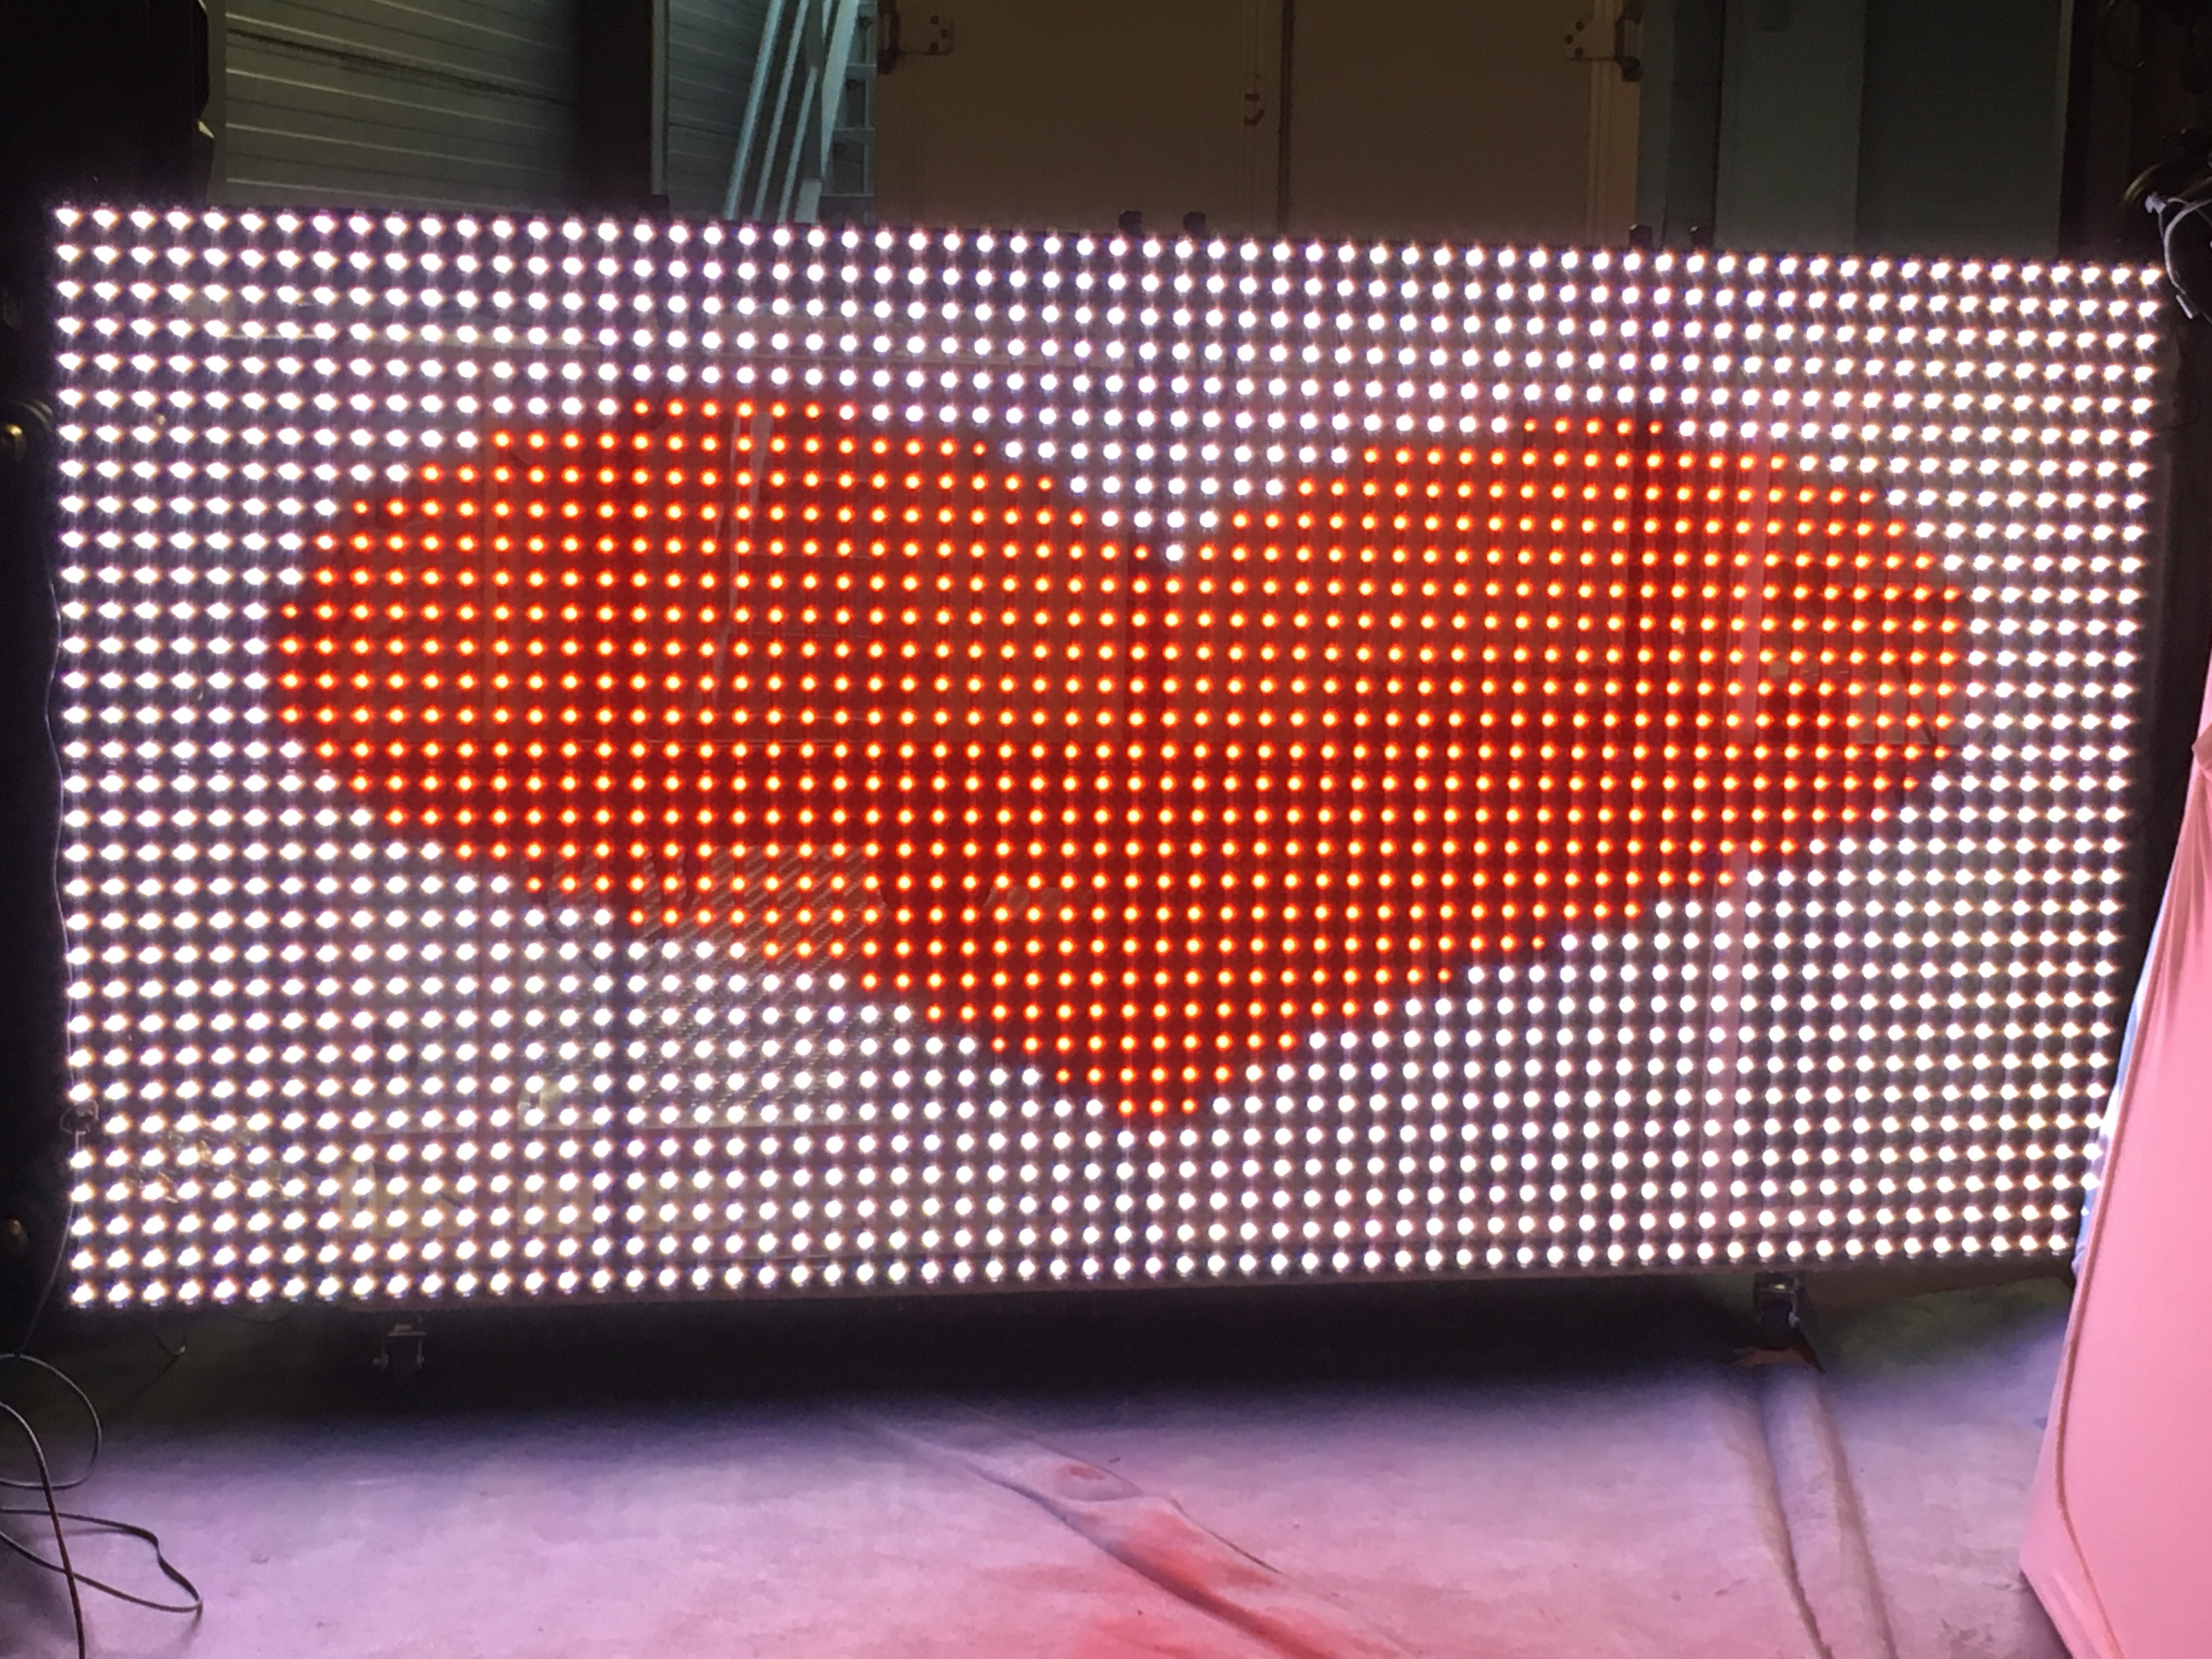 DJ Booth LED pixel